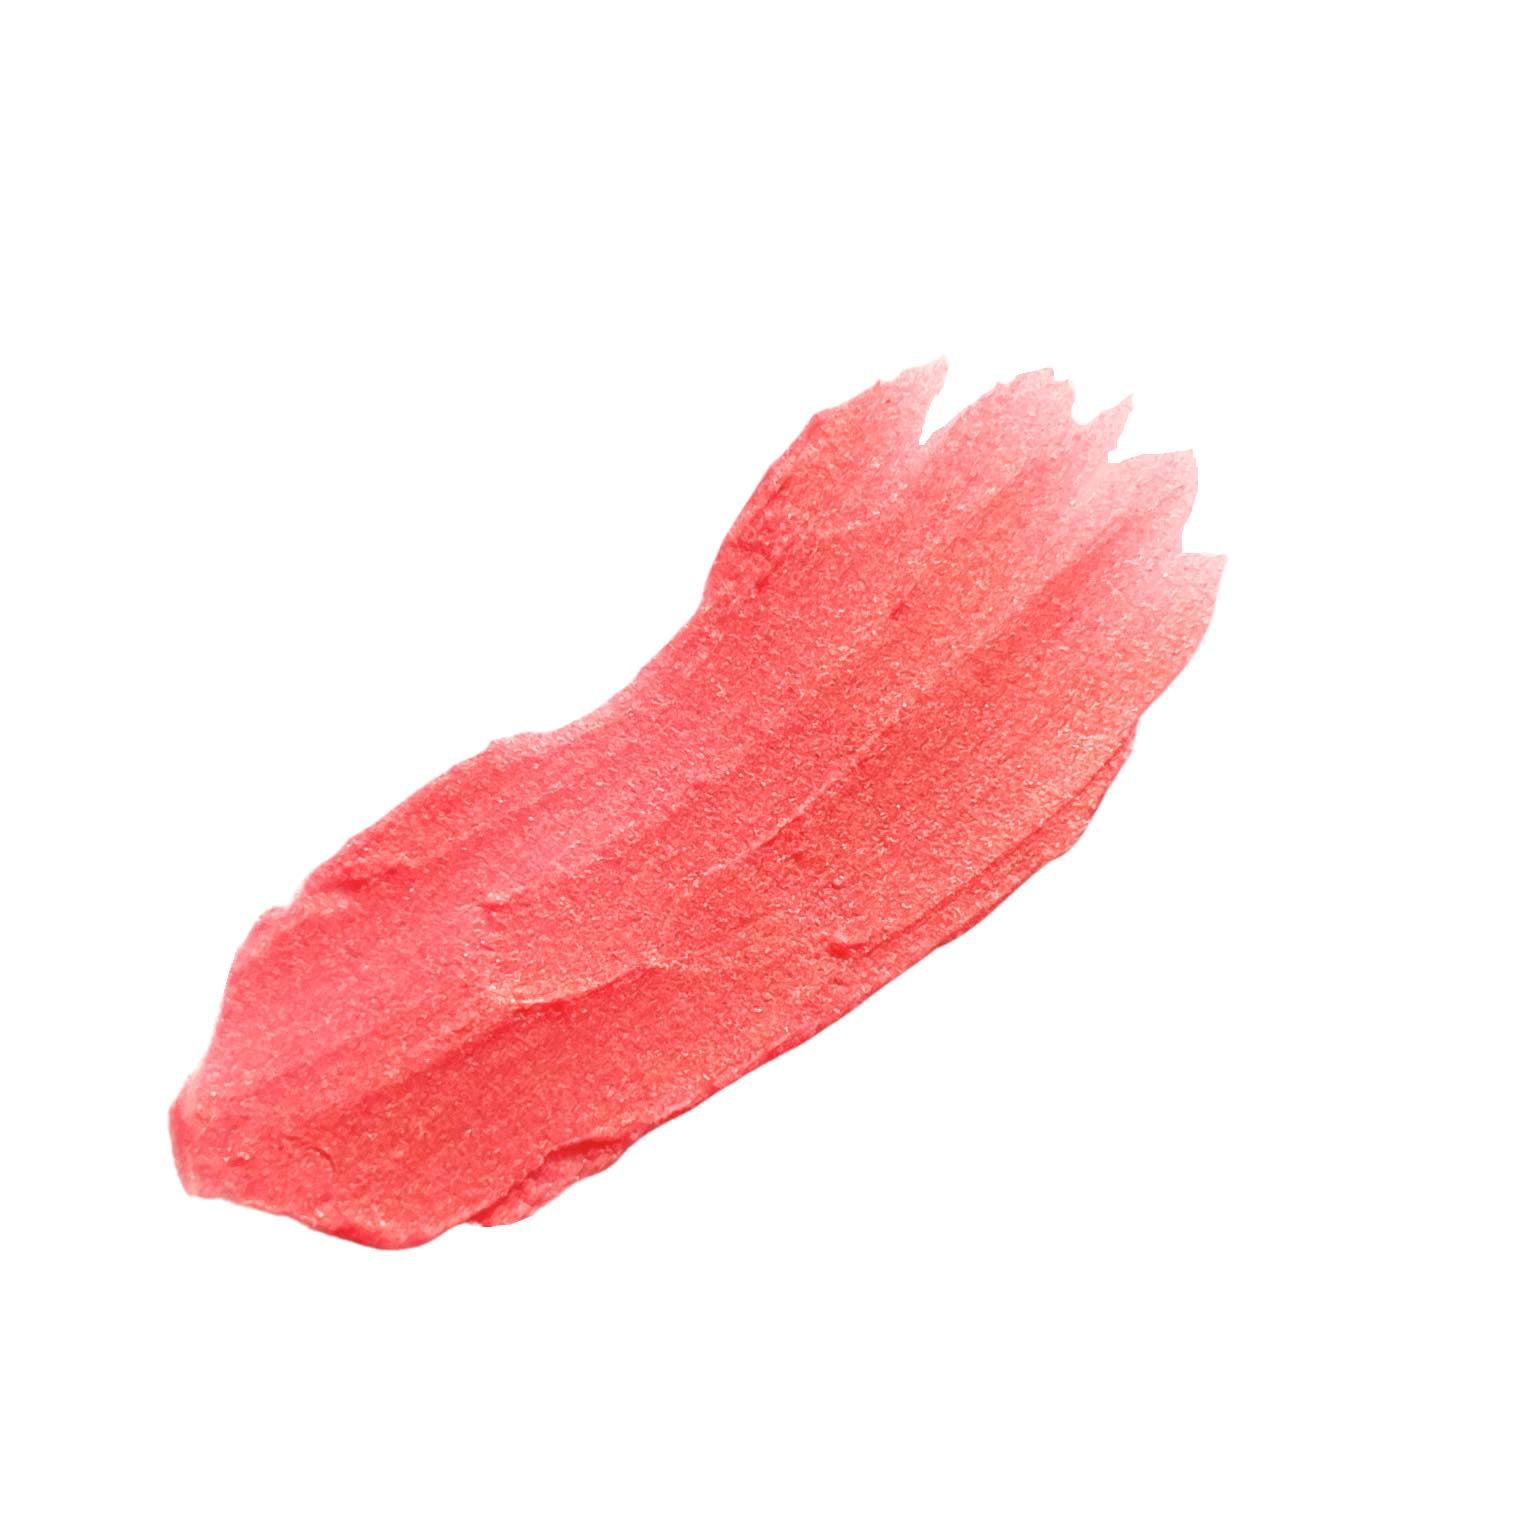 soft peach - cherry blossom tinted lip balm smear on white background